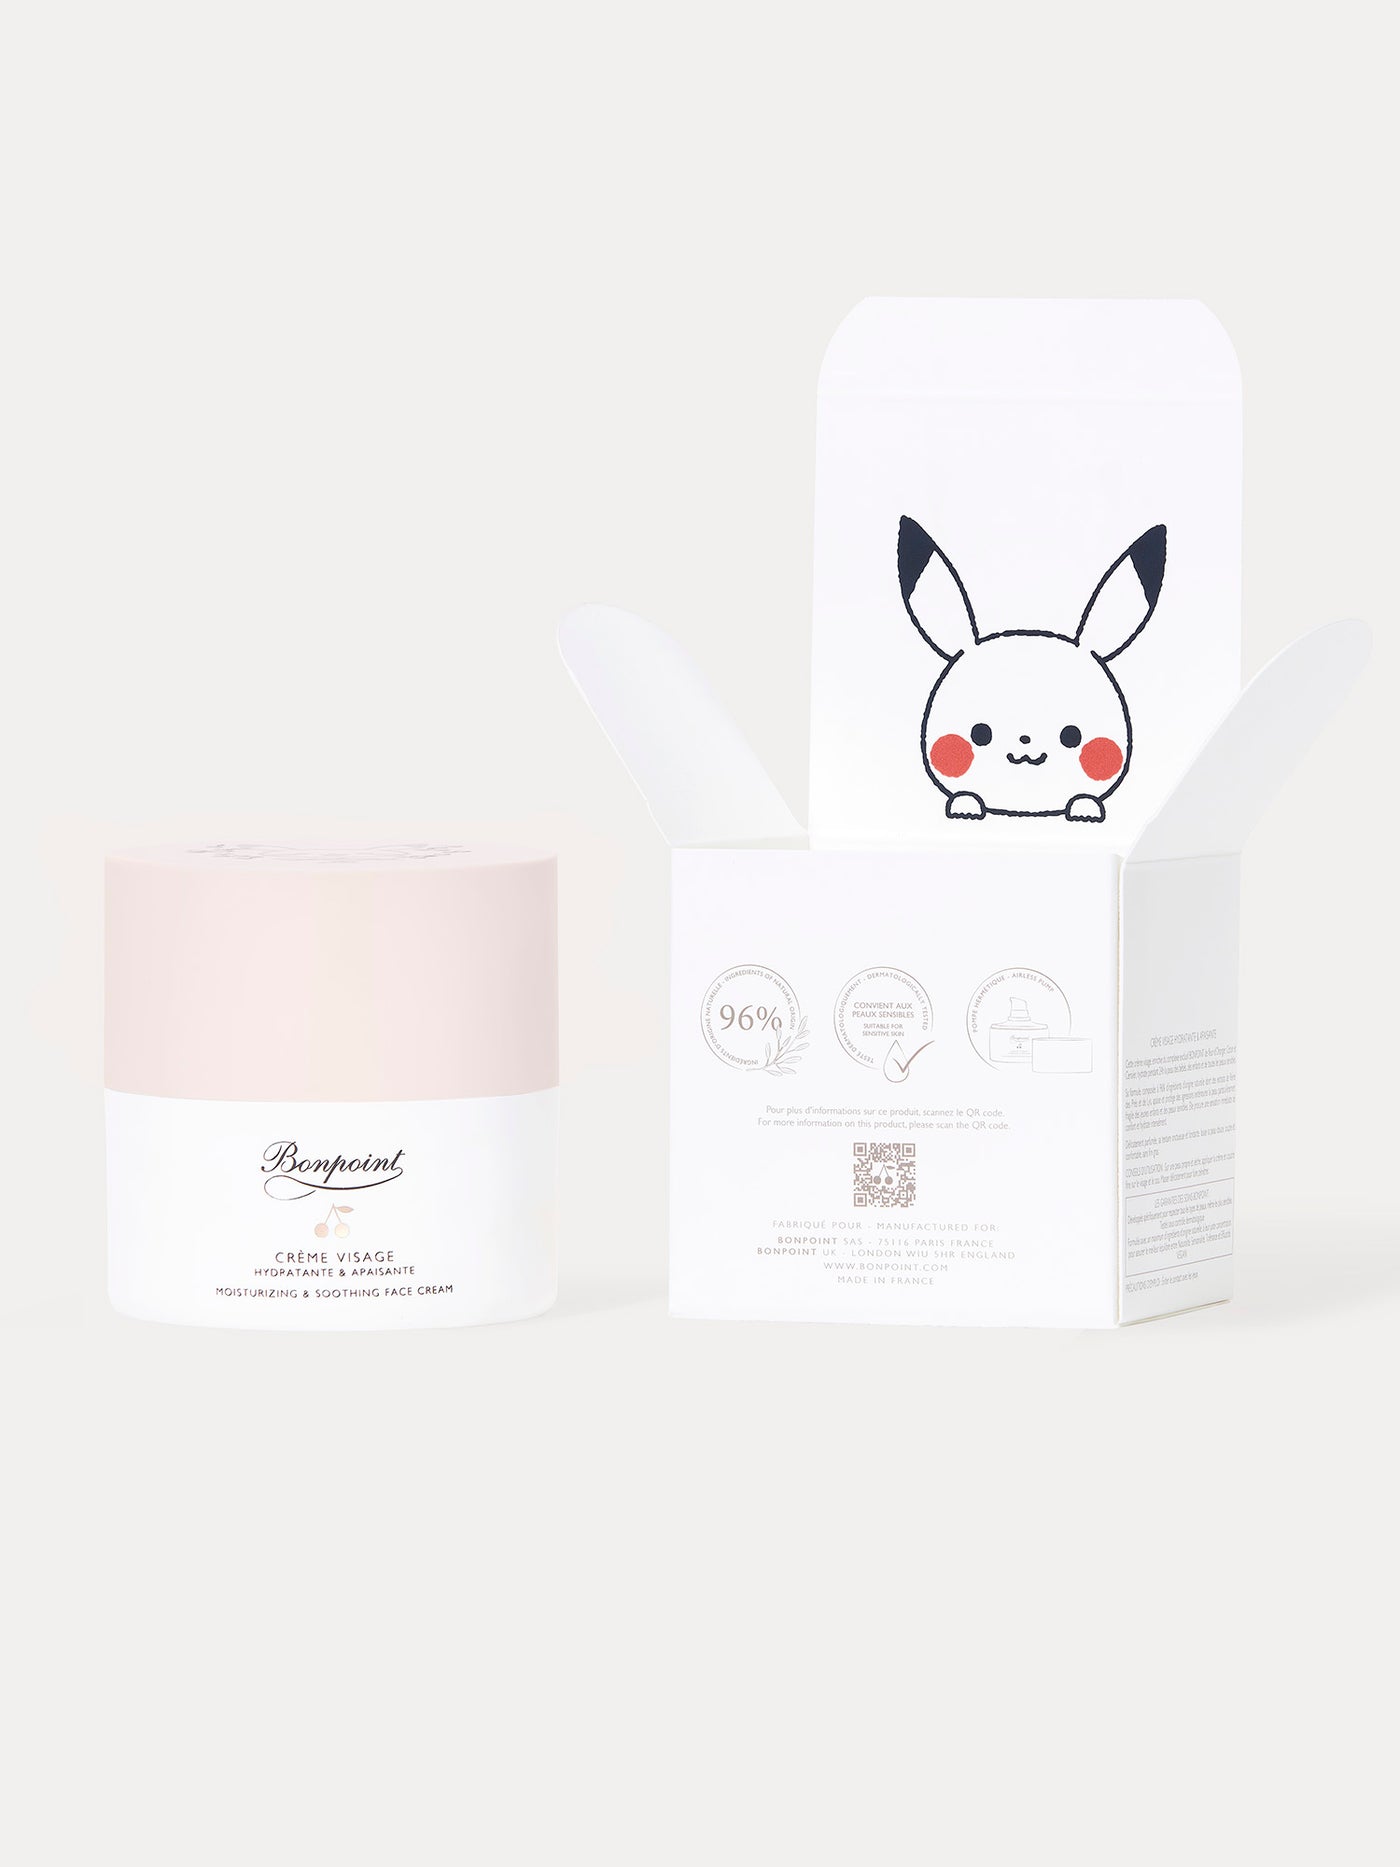 Moisturizing face cream Airless Pump 50 ml - Pokémon limited edition